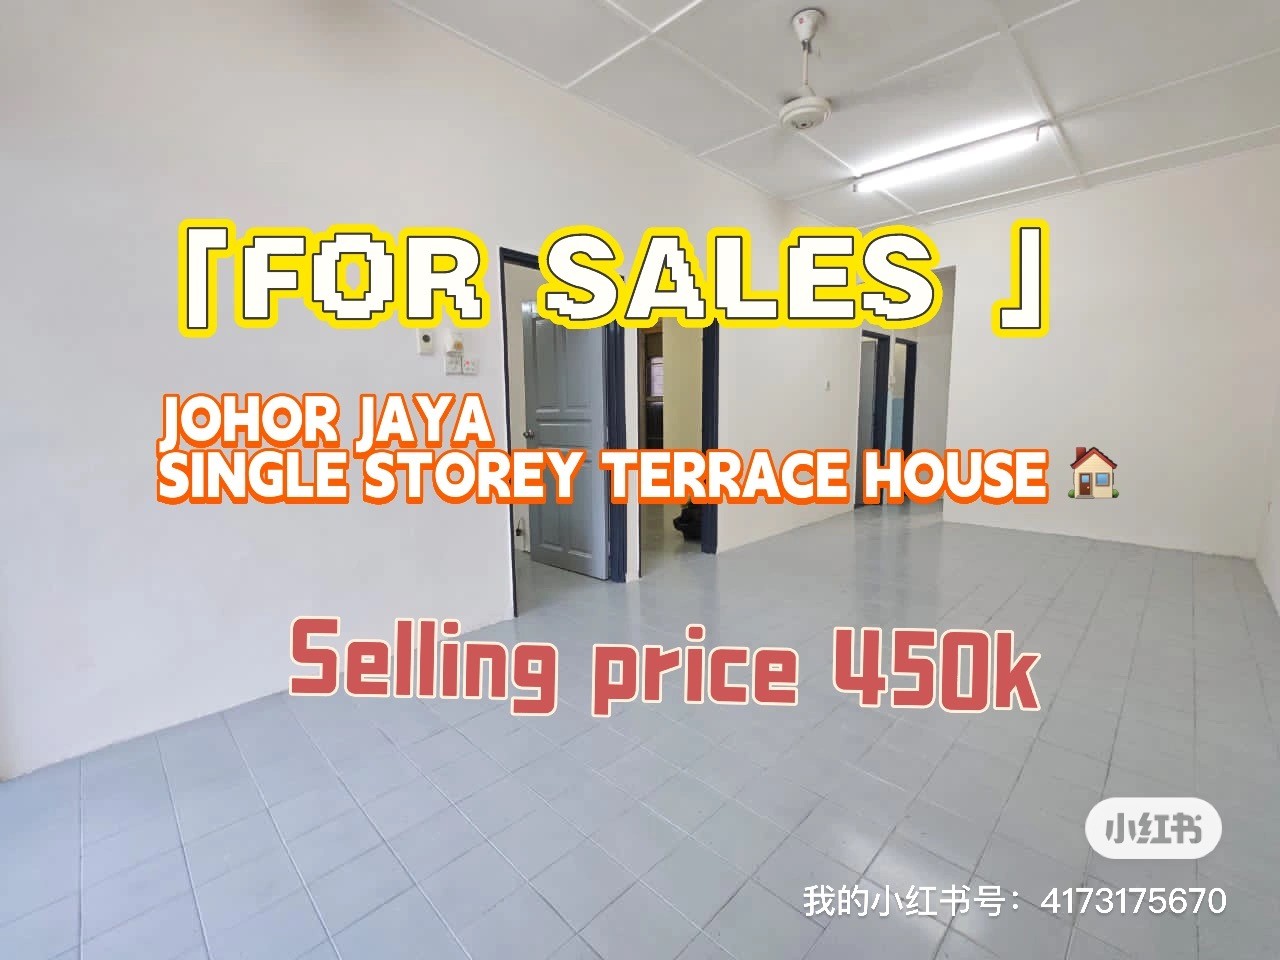 Johor jaya johor jaya single storey terrace house for sales